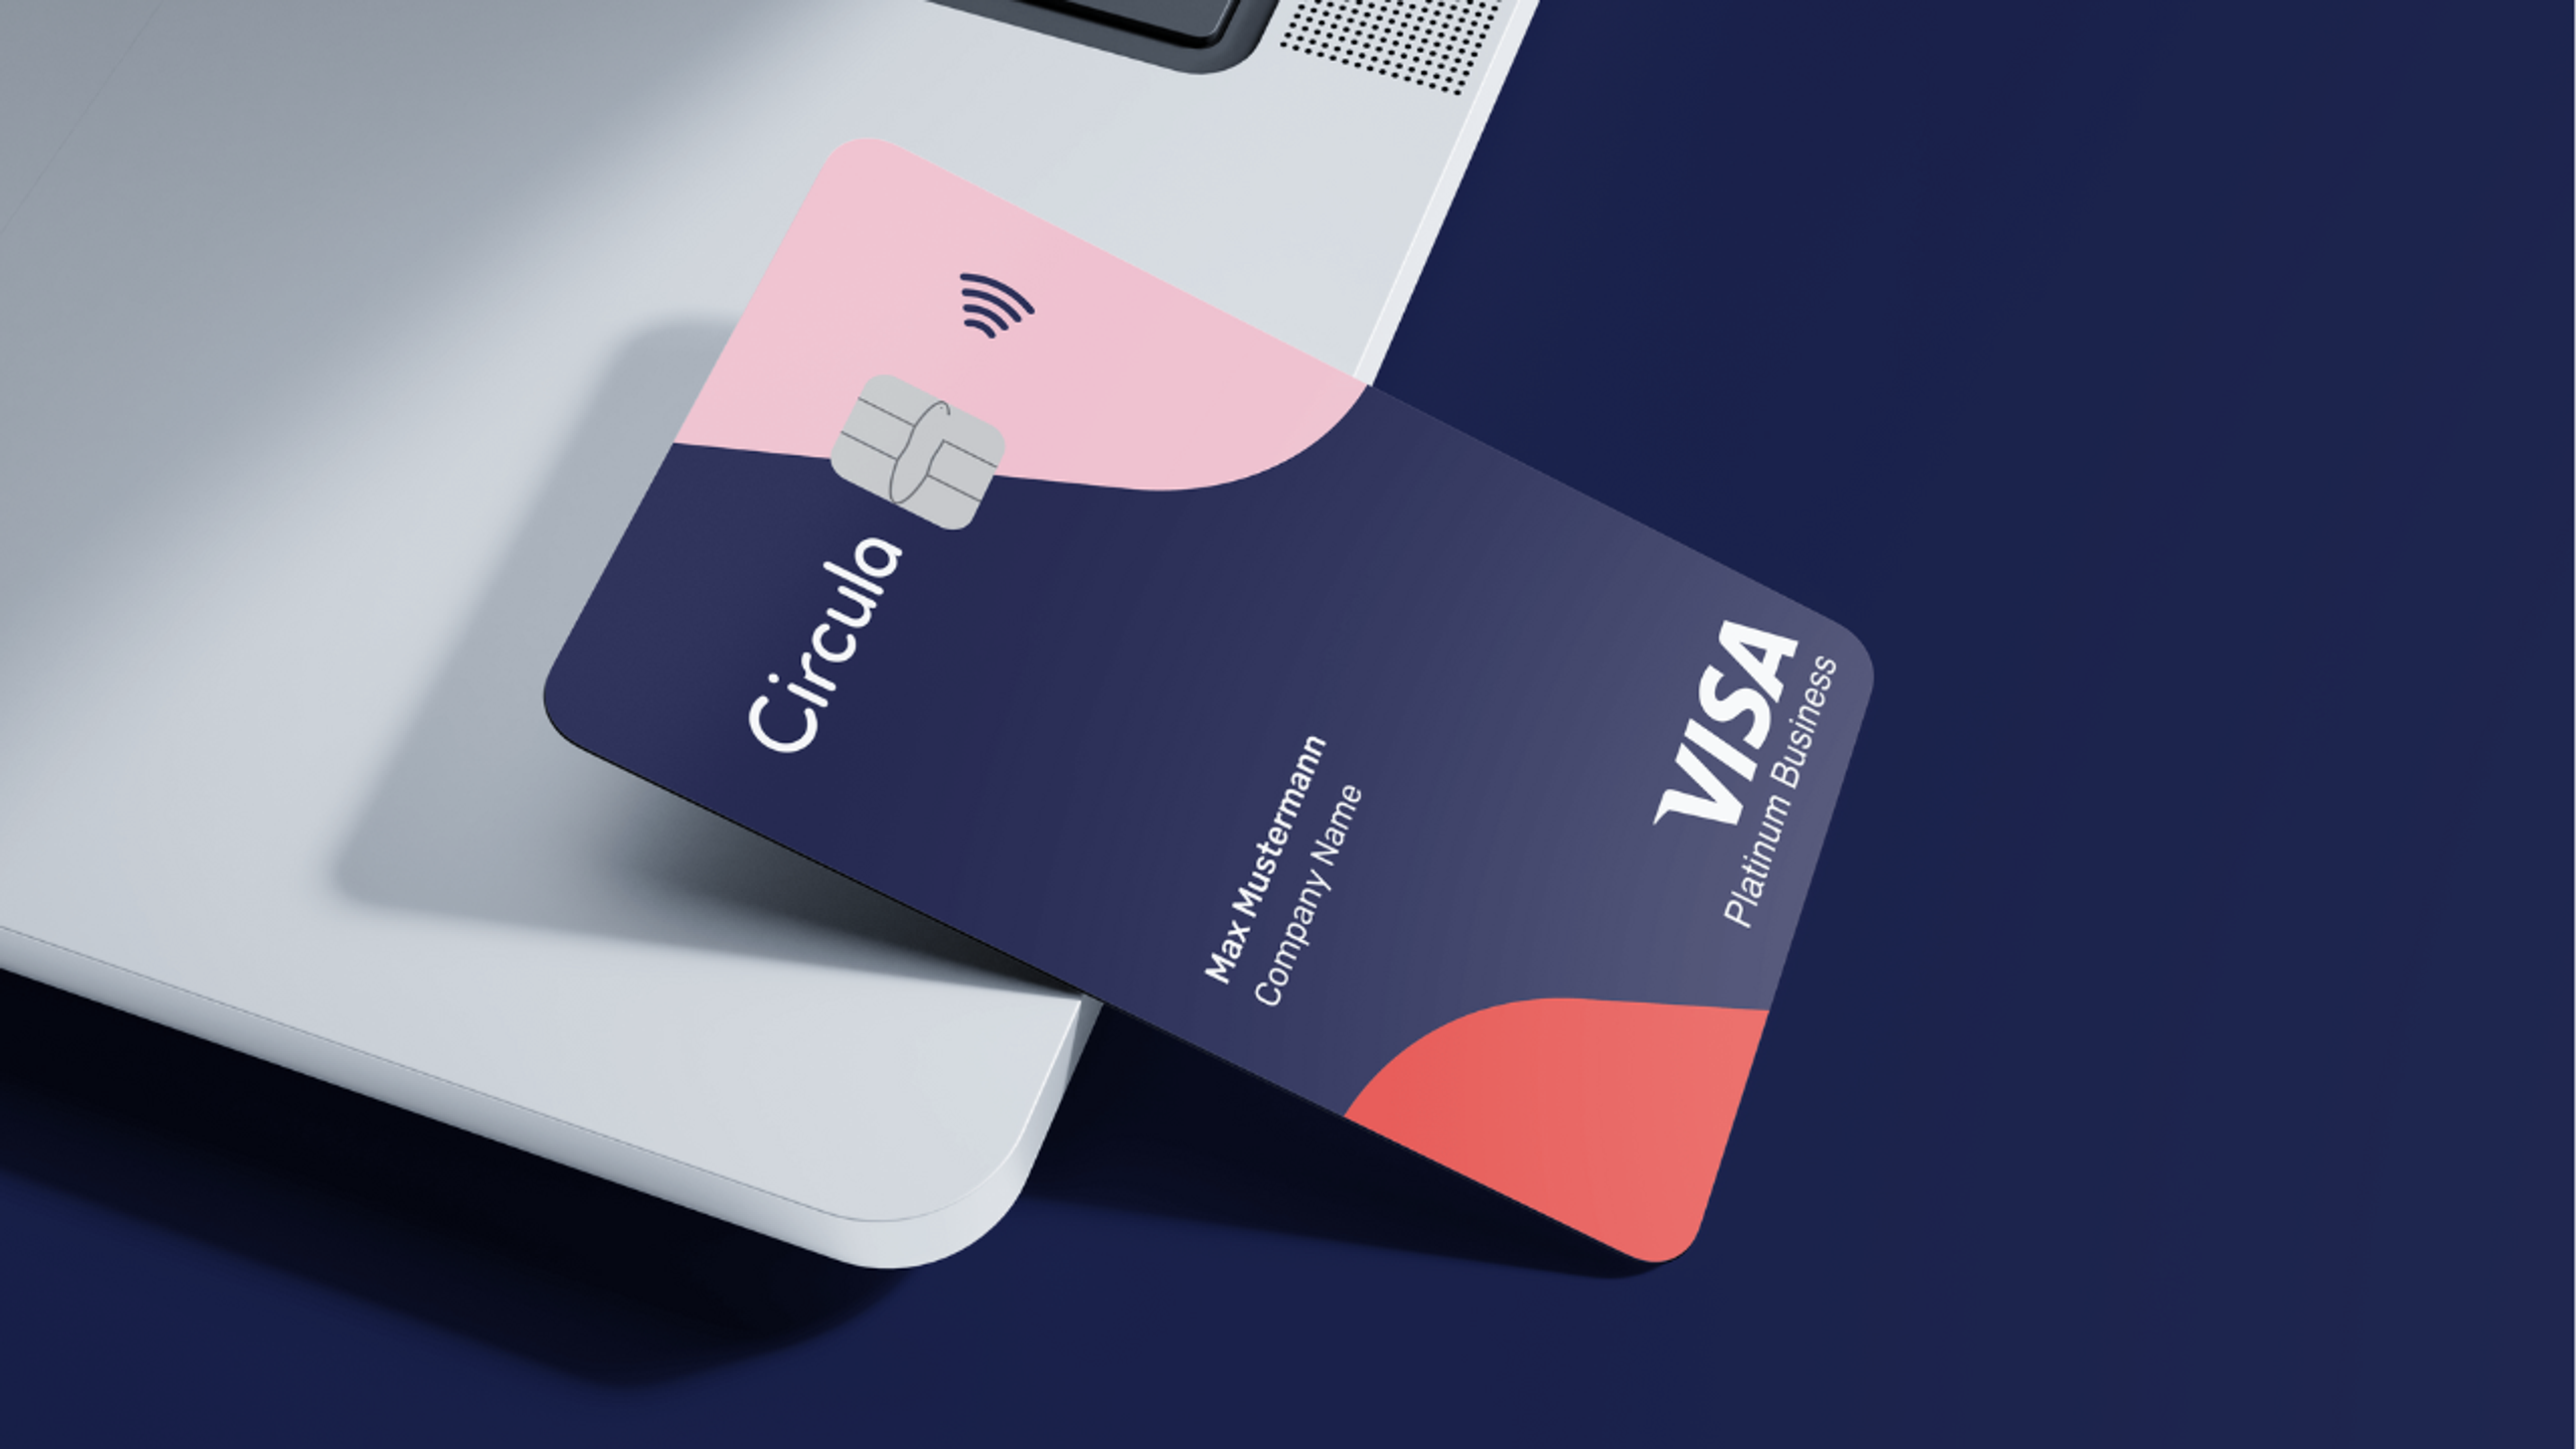 Circula launches its fully digital corporate credit card